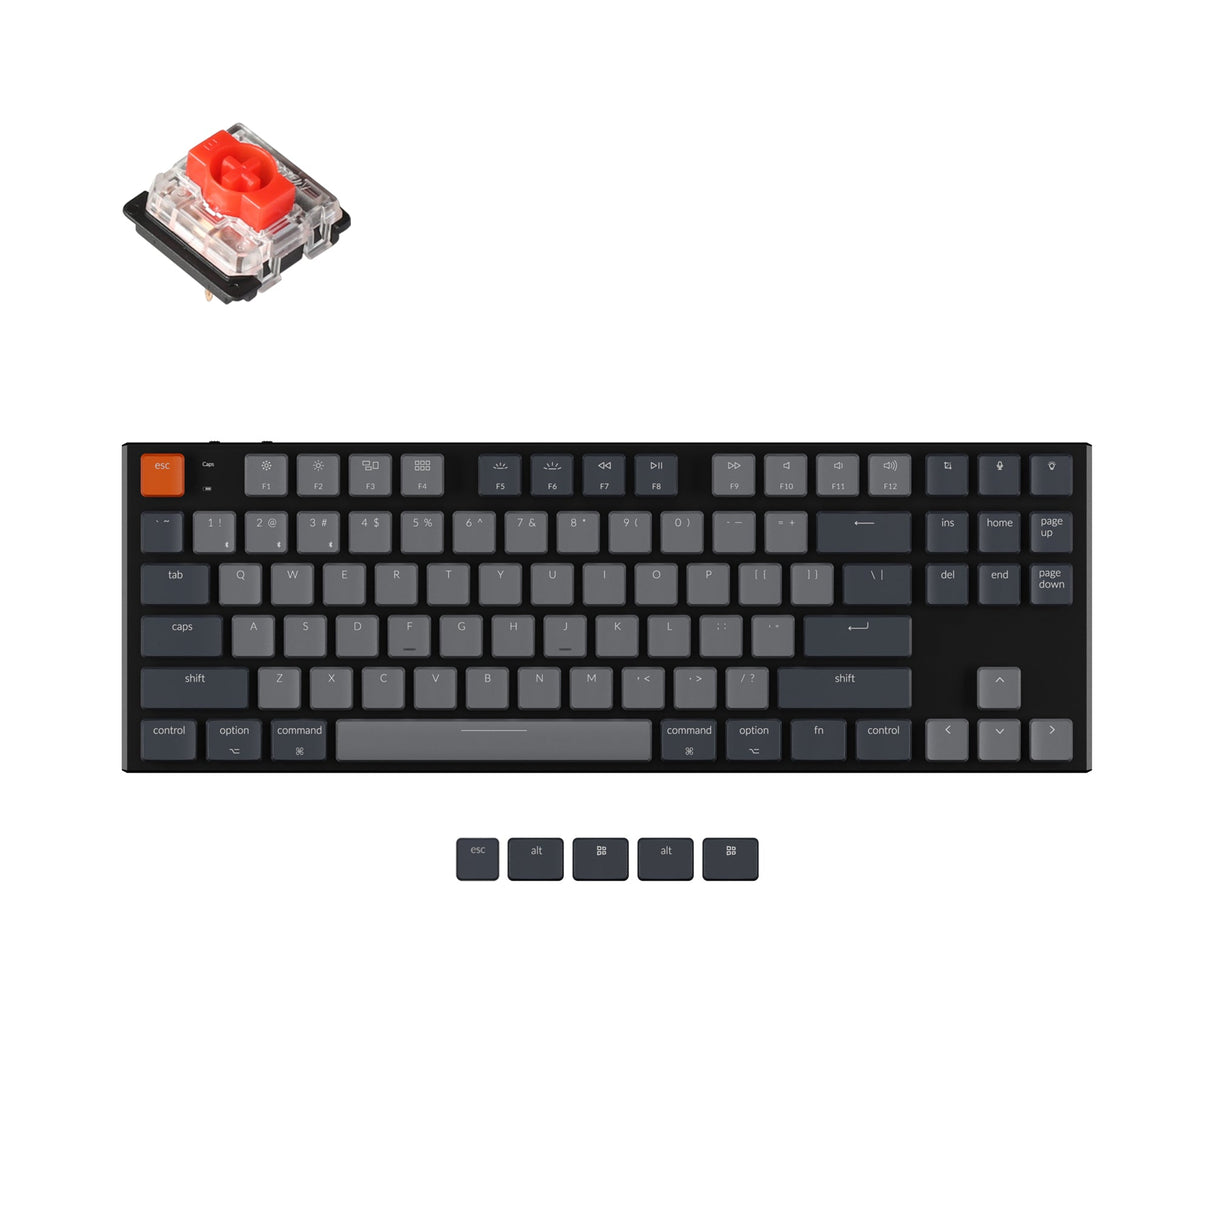 Keychron k1 v5 ultra slim wireless mechanical keyboard 87 keys white backlight gateron mechanical low profile red switch